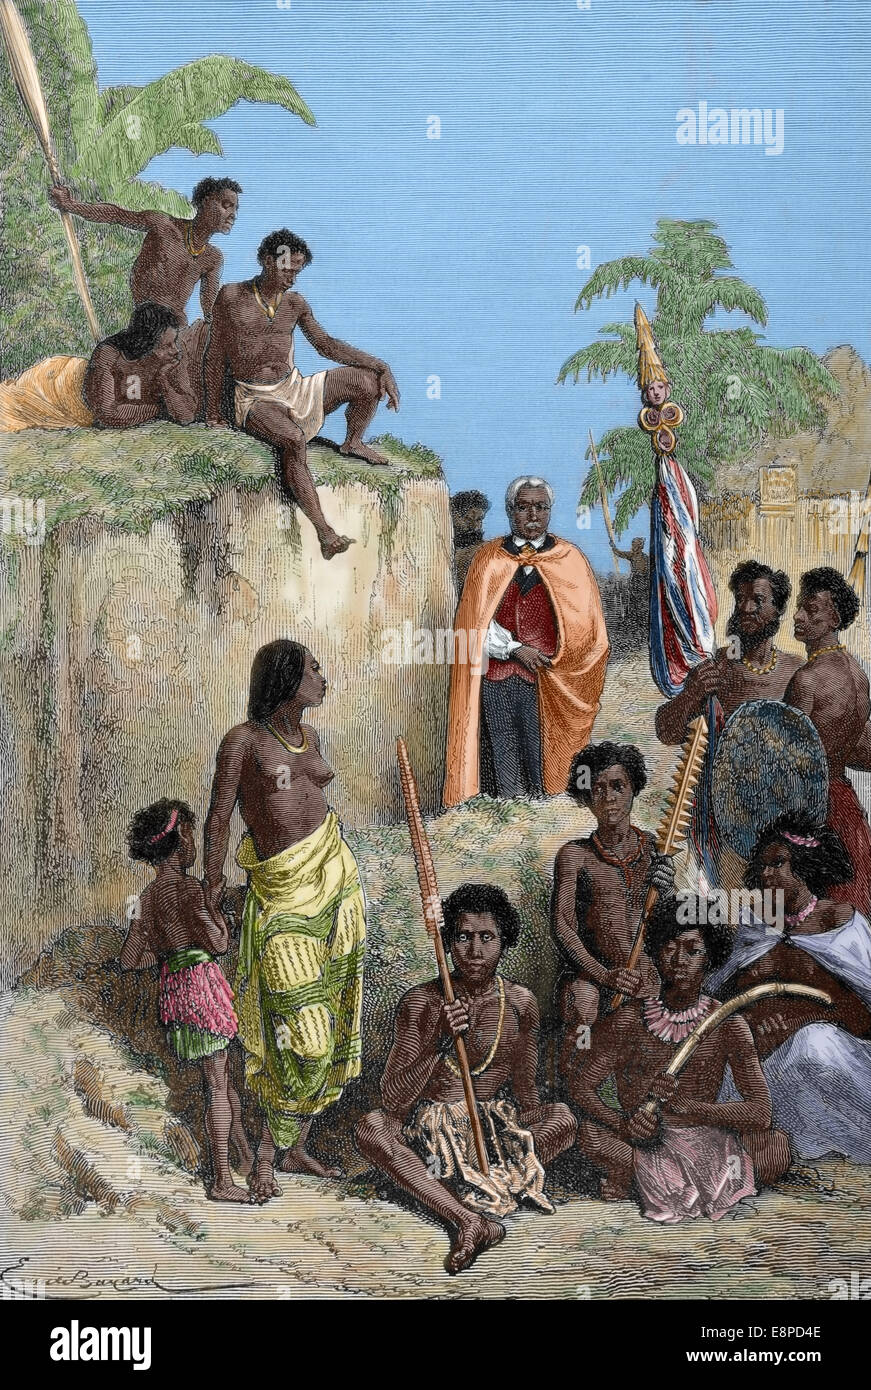 Kamehameha I (1758-1819). King of Hawaii Island. Hawaiians, 1819. Kamehameha and his warriors. Engraving. Colored. Stock Photo